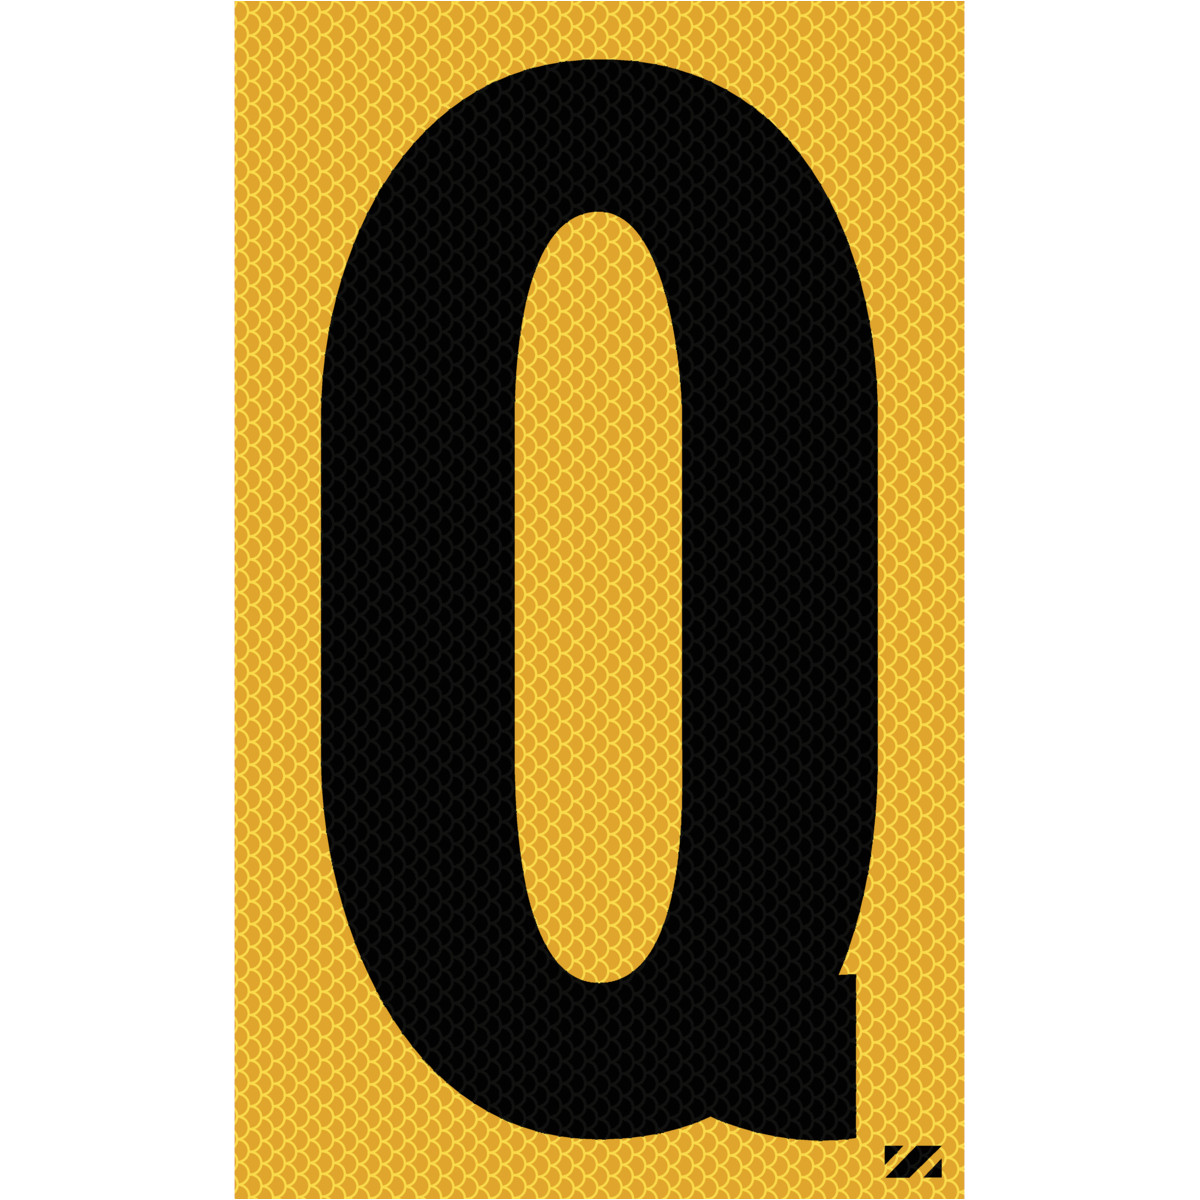 2.5" Black on Yellow High Intensity Reflective "Q"